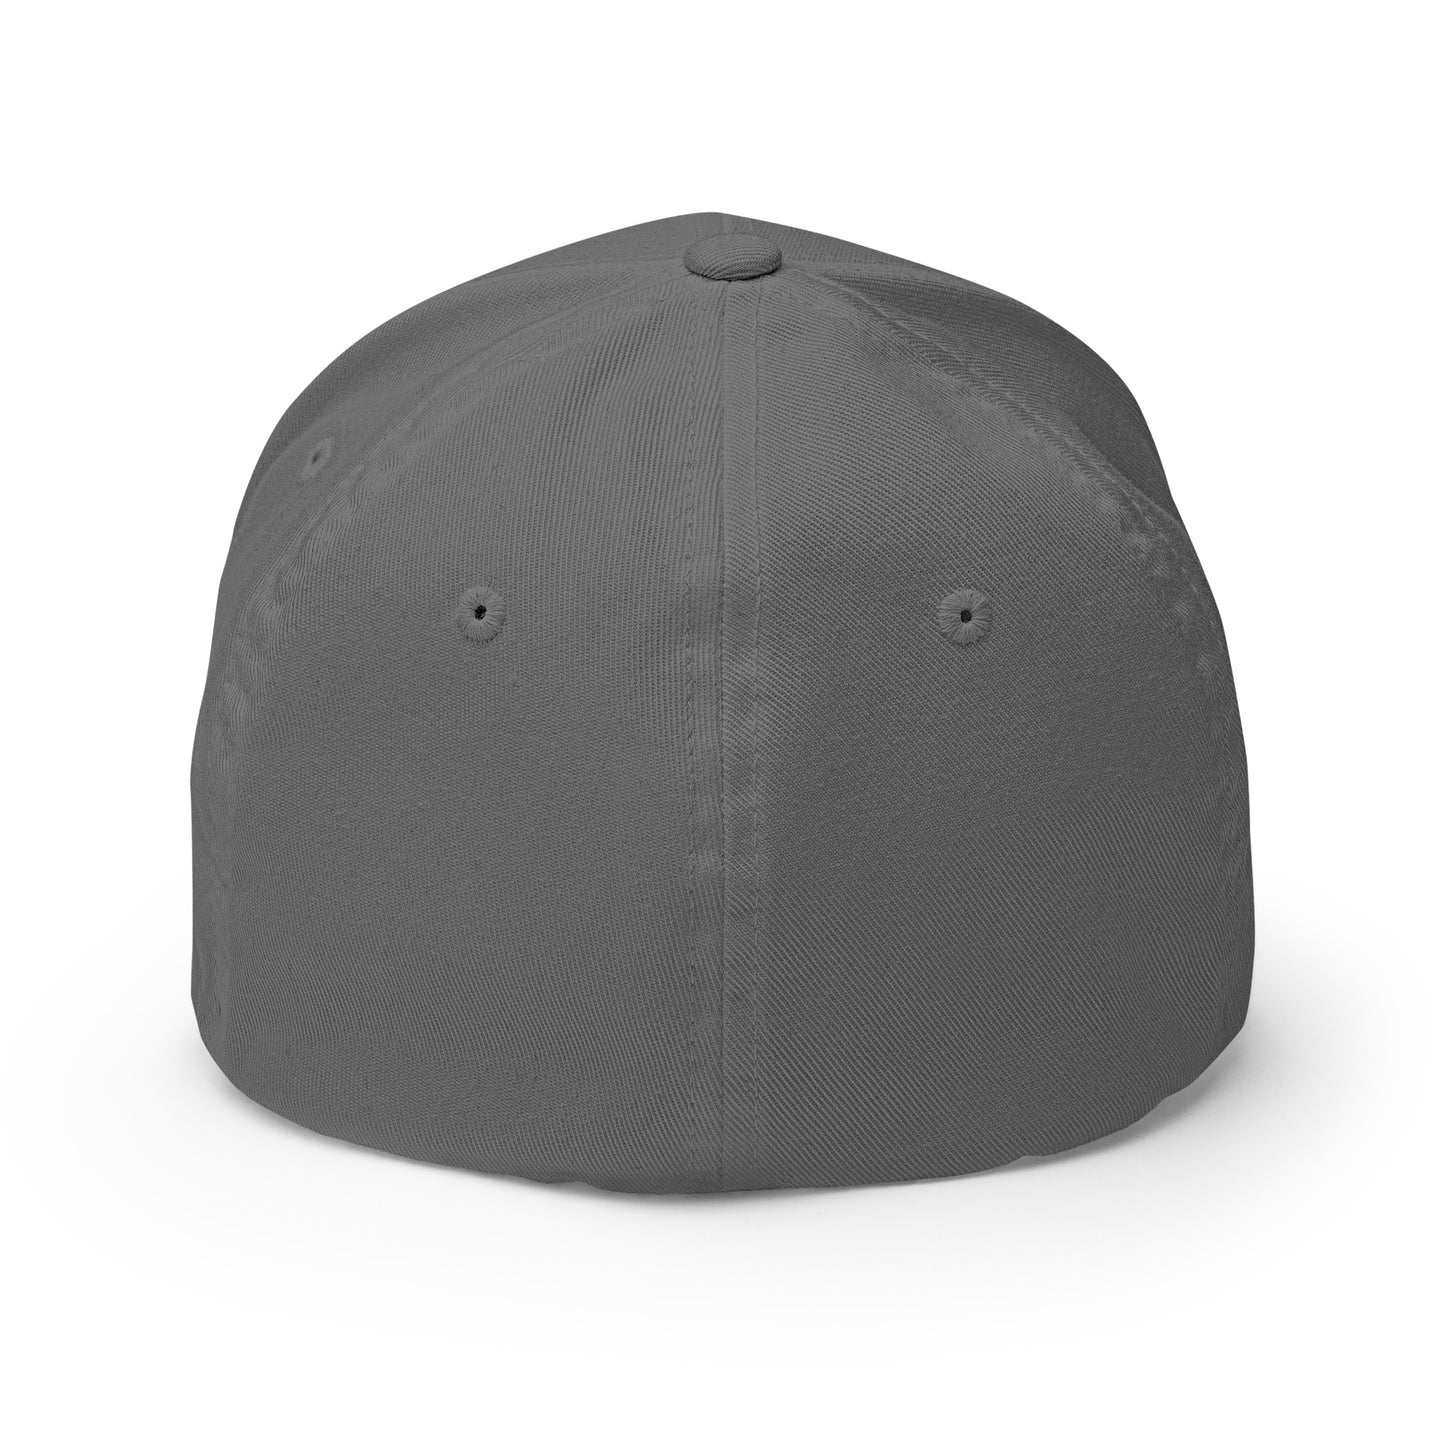 Baseball Cap with Dark Cloud Symbol